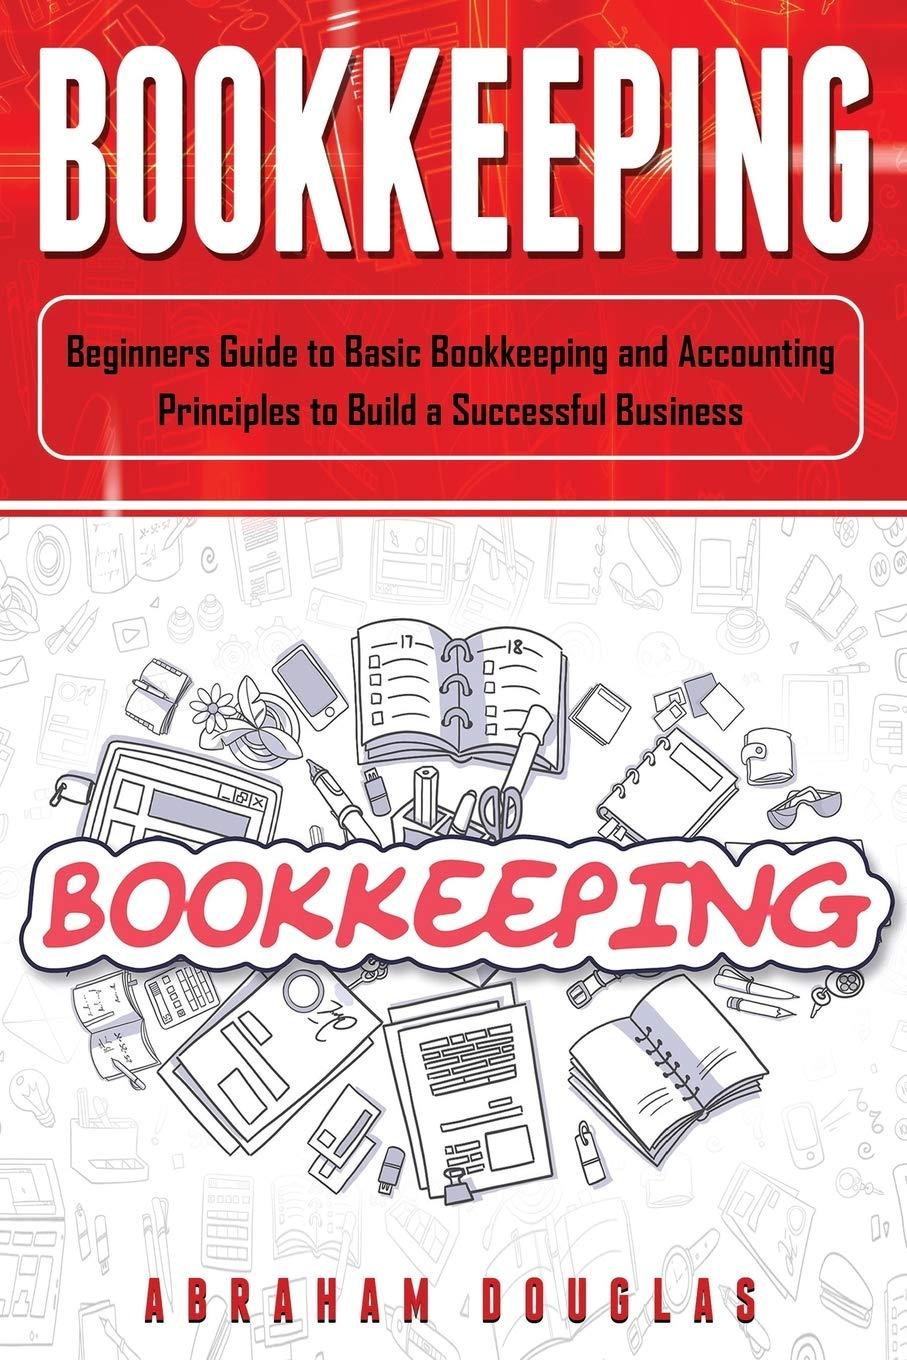 bookkeeping 1st edition abraham douglas 1679538624, 978-1679538629